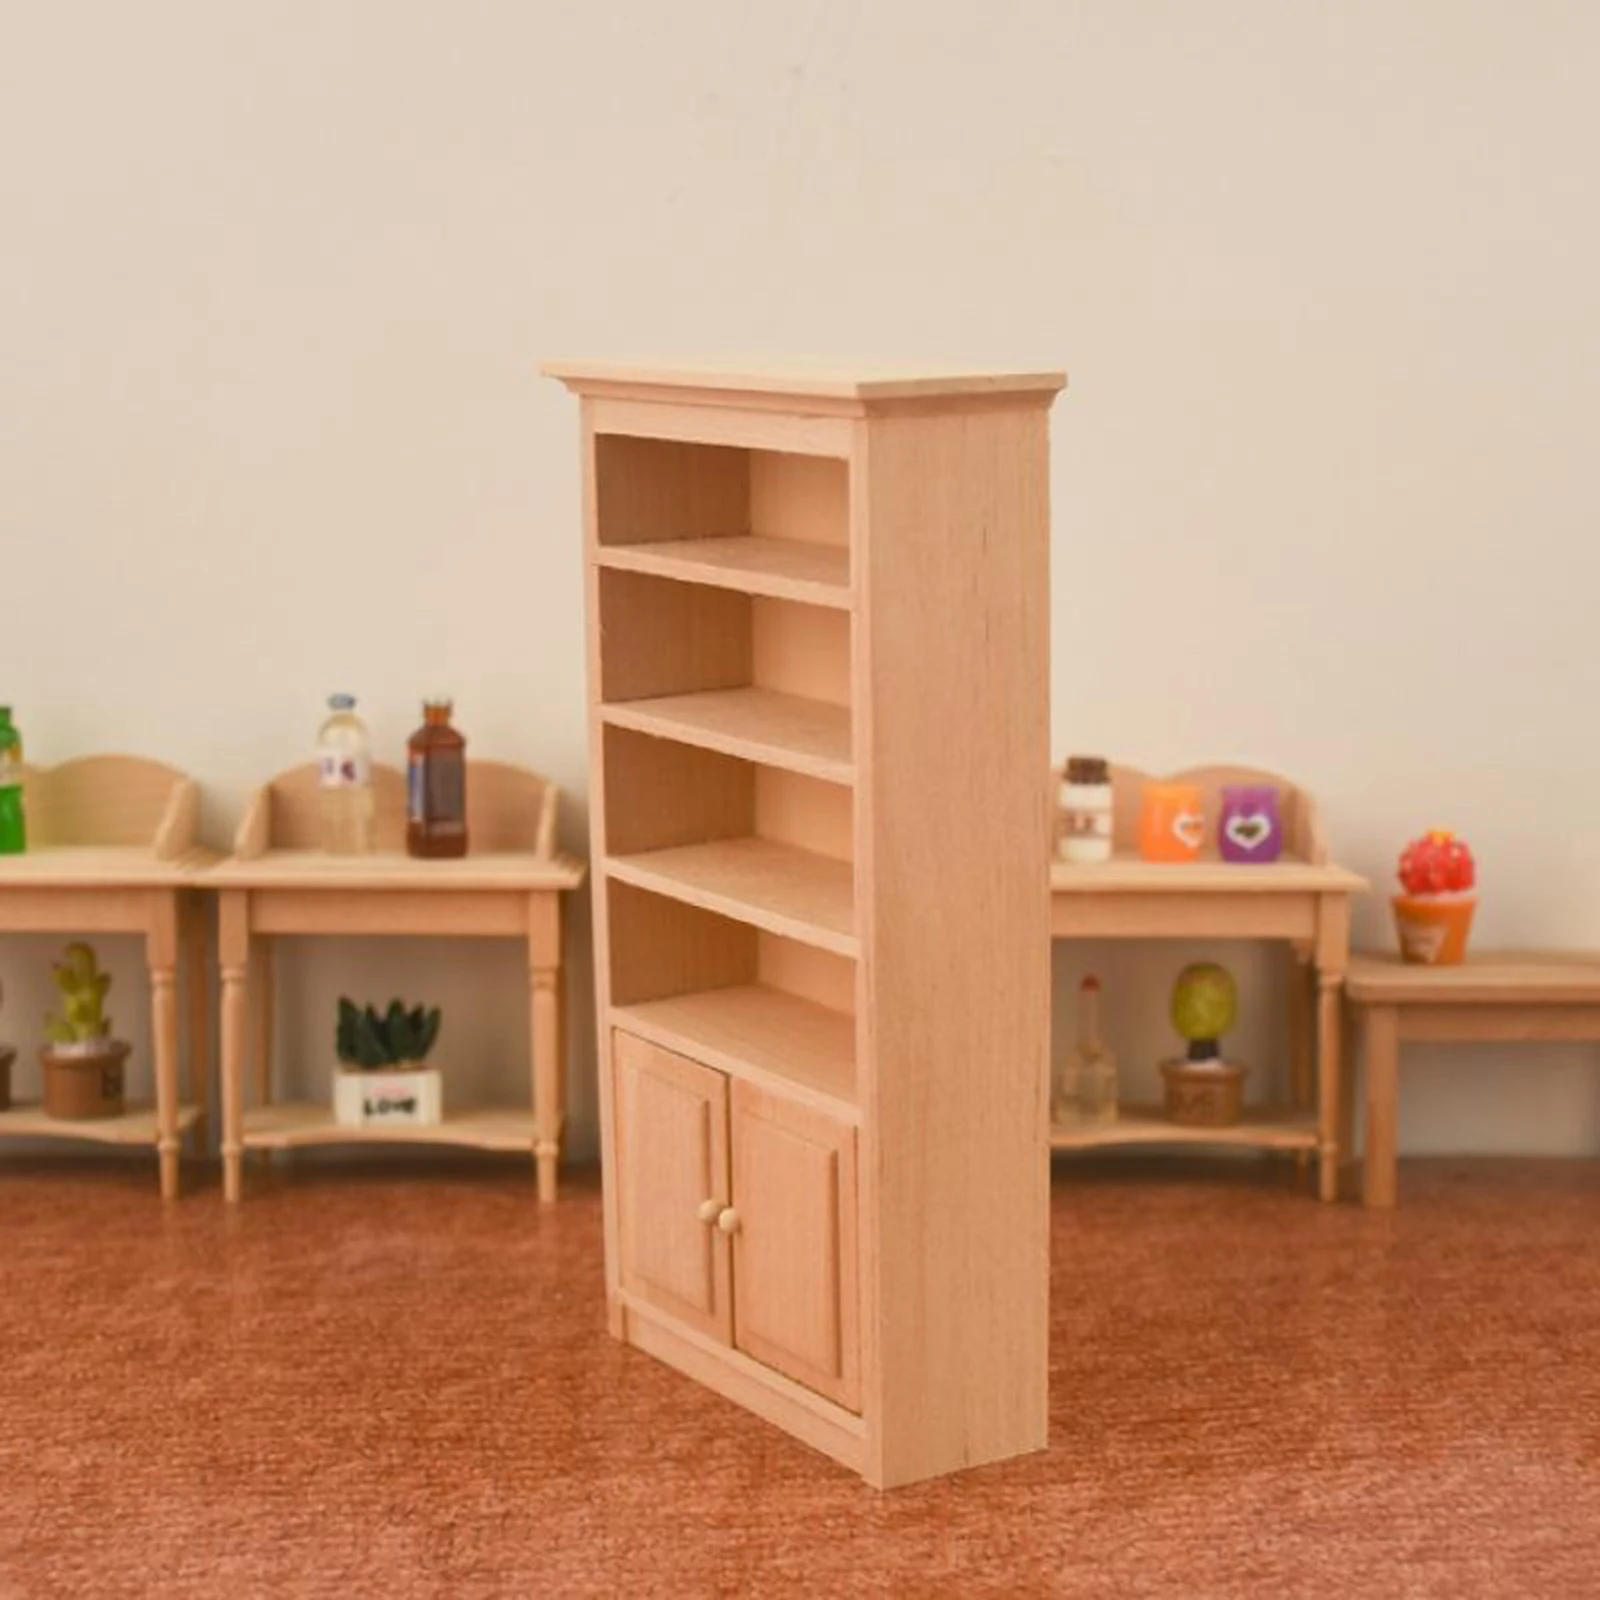 1/12 Doll House Miniature Wood Cabinet Bookshelf Simulation Supplies Scenery